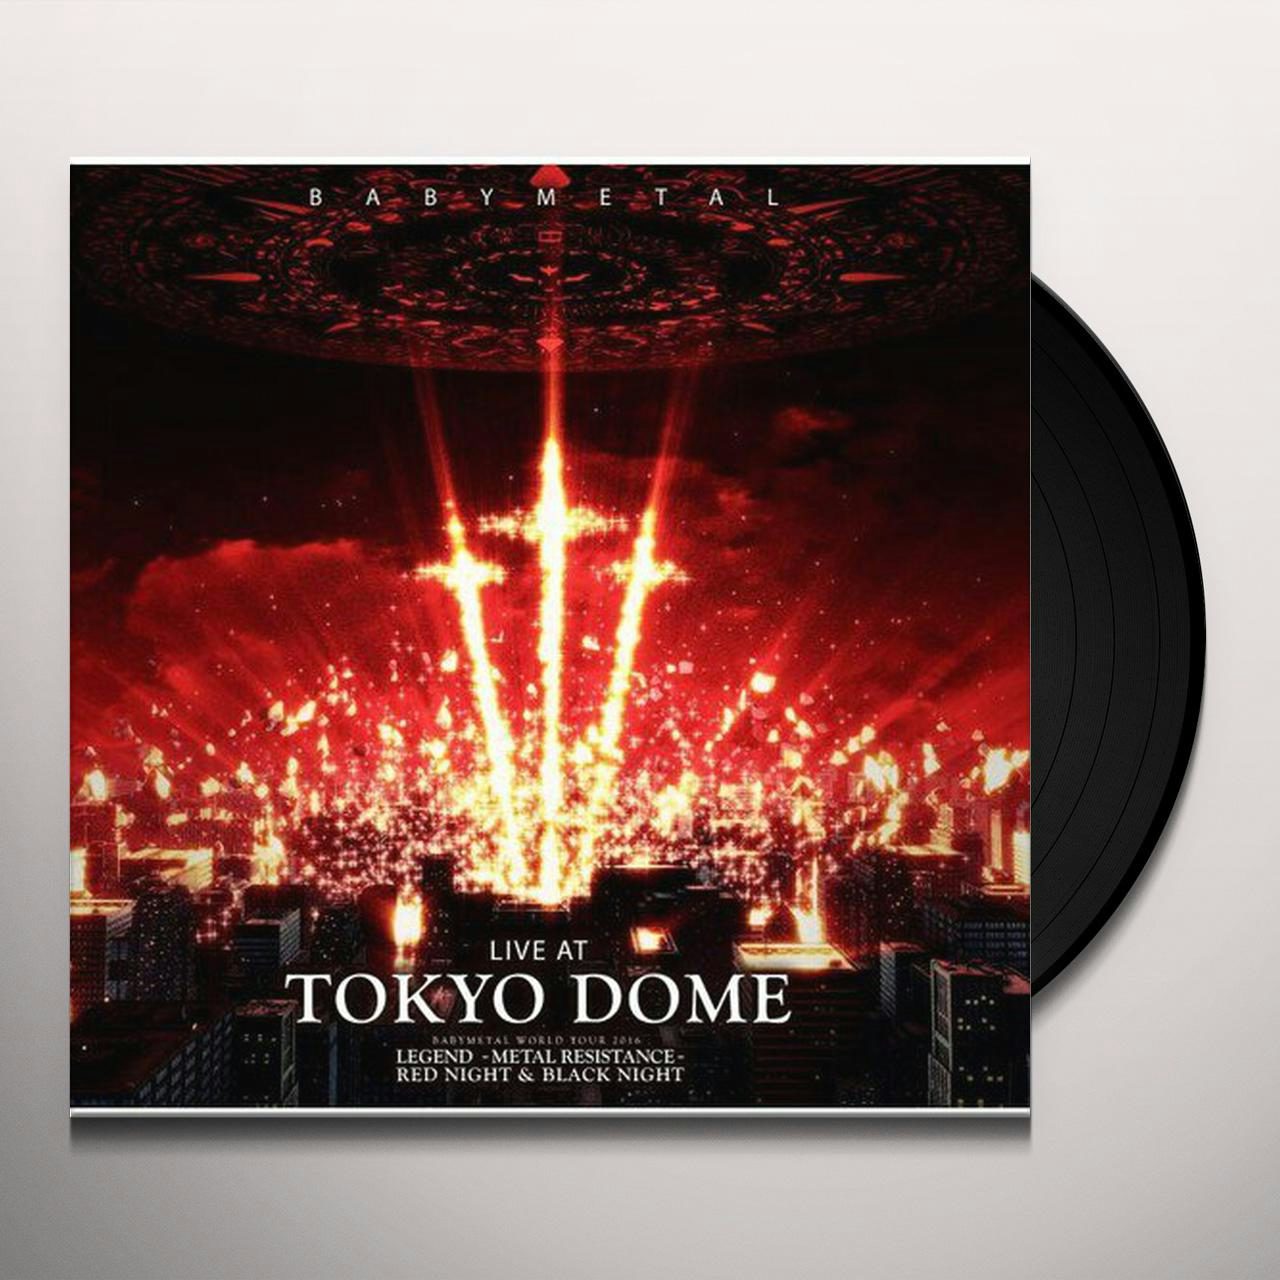 LIVE AT TOKYO DOME (BABYMETAL WORLD TOUR 2016 ) Vinyl